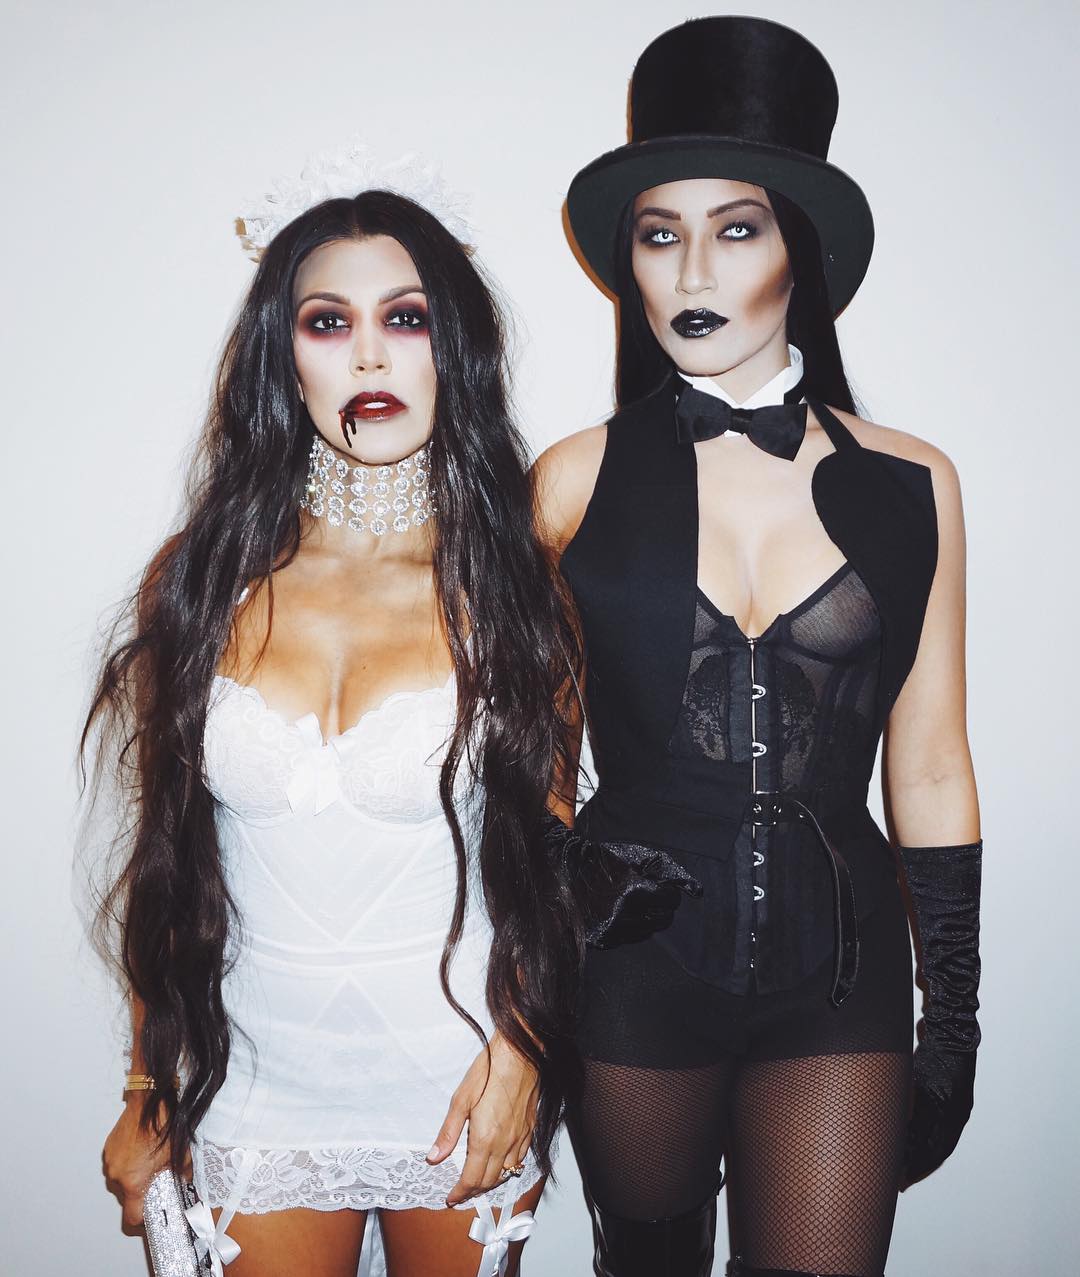 Kourtney Kardashian and Steph Shep on Halloween